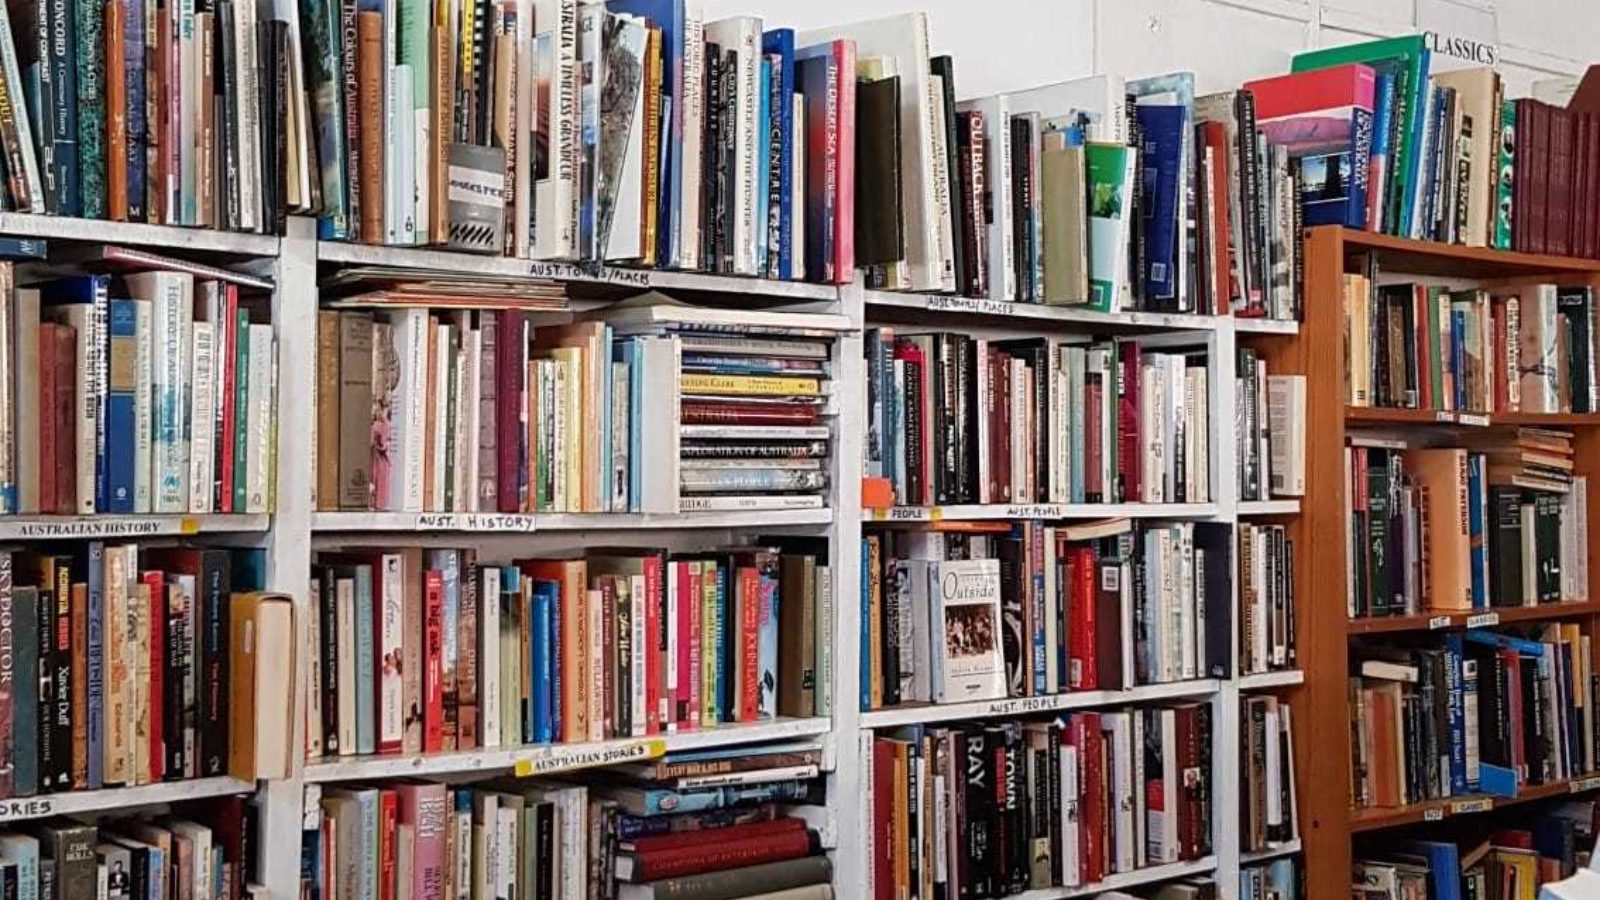 Gloucester Charities Book Sale interior shelves